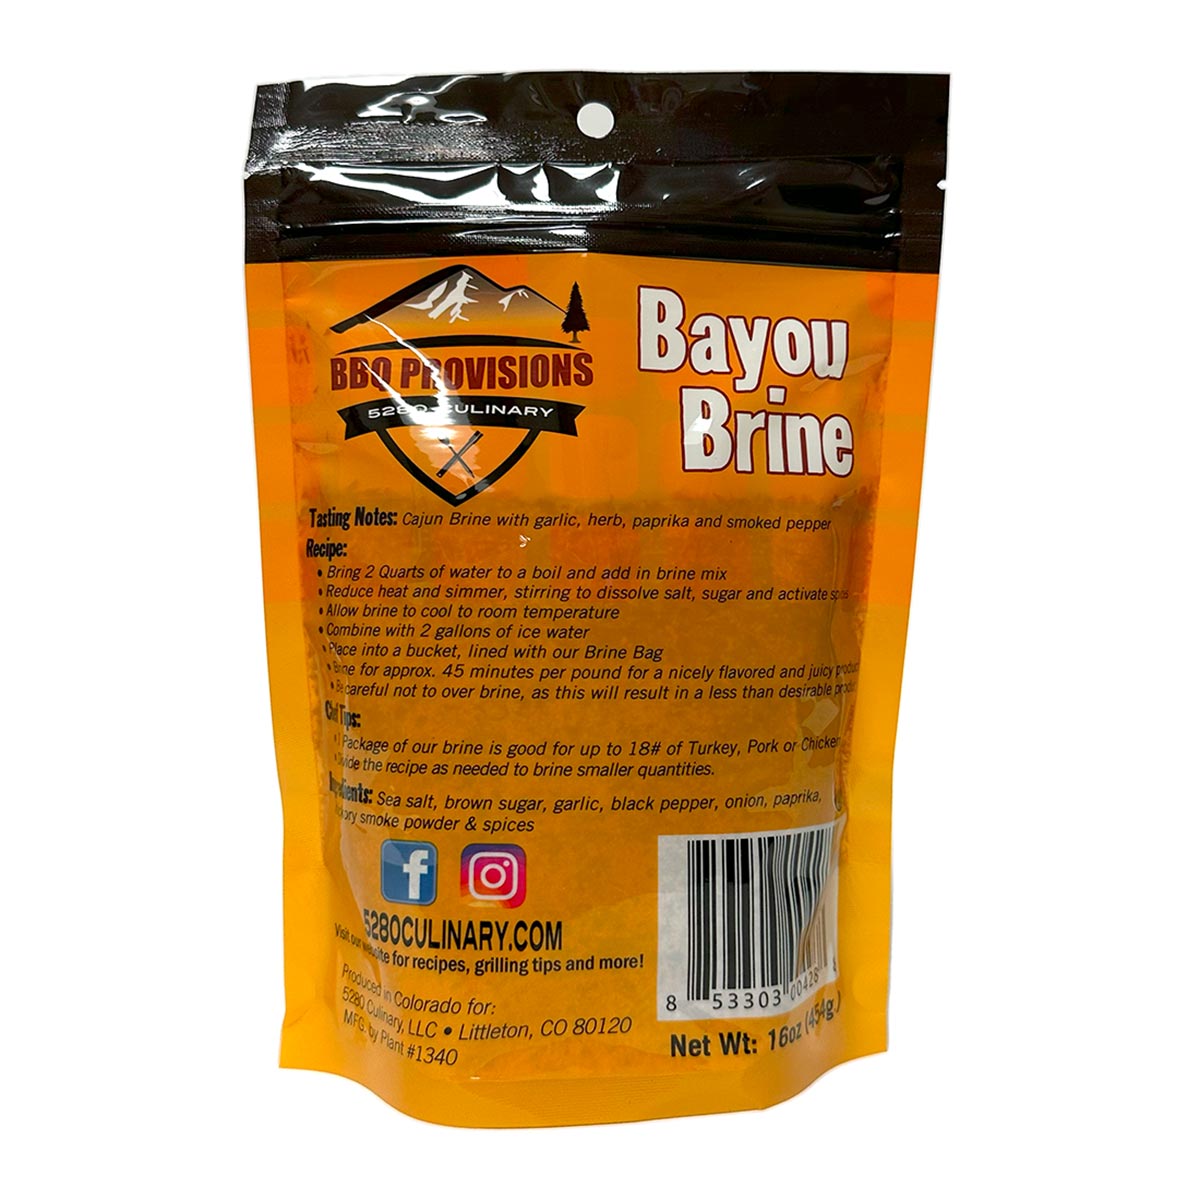 BBQ Provisions Bayou Brine Mix